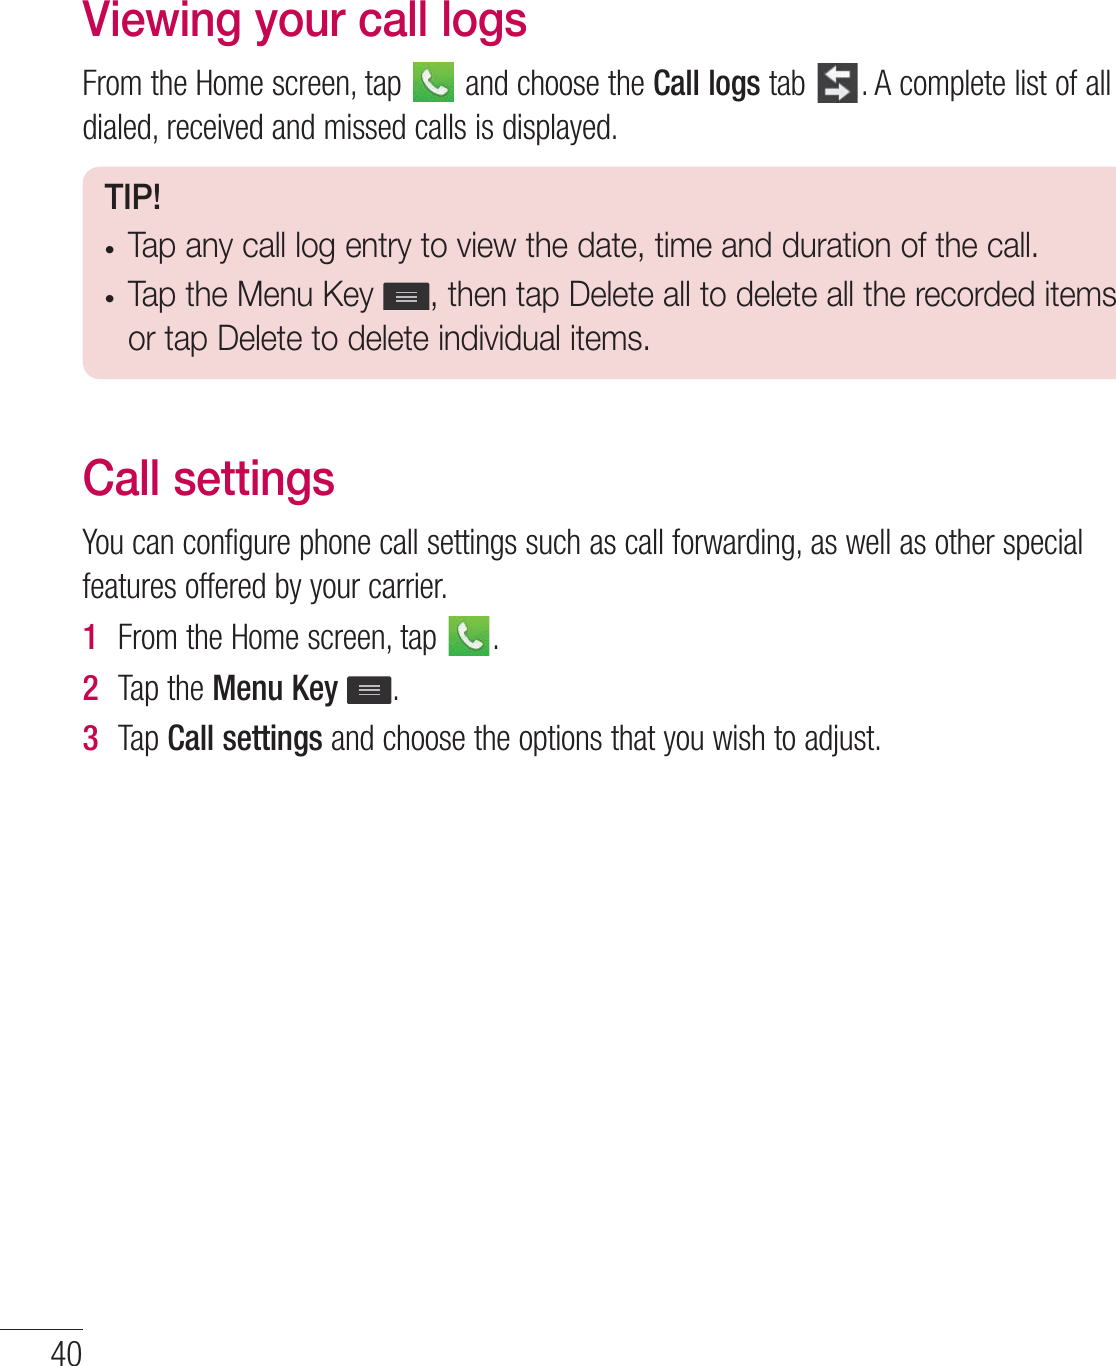 Viewing your call logs&apos;SPNUIF)PNFTDSFFOUBQ BOEDIPPTFUIFCall logsUBC &quot;DPNQMFUFMJTUPGBMMEJBMFESFDFJWFEBOENJTTFEDBMMTJTEJTQMBZFETIP!tTap any call log entry to view the date, time and duration of the call.tTap the Menu Key  , then tap Delete all to delete all the recorded items or tap Delete to delete individual items.Call settings:PVDBODPOGJHVSFQIPOFDBMMTFUUJOHTTVDIBTDBMMGPSXBSEJOHBTXFMMBTPUIFSTQFDJBMGFBUVSFTPGGFSFECZZPVSDBSSJFS1  &apos;SPNUIF)PNFTDSFFOUBQ 2  5BQUIFMenu Key 3  5BQCall settingsBOEDIPPTFUIFPQUJPOTUIBUZPVXJTIUPBEKVTU